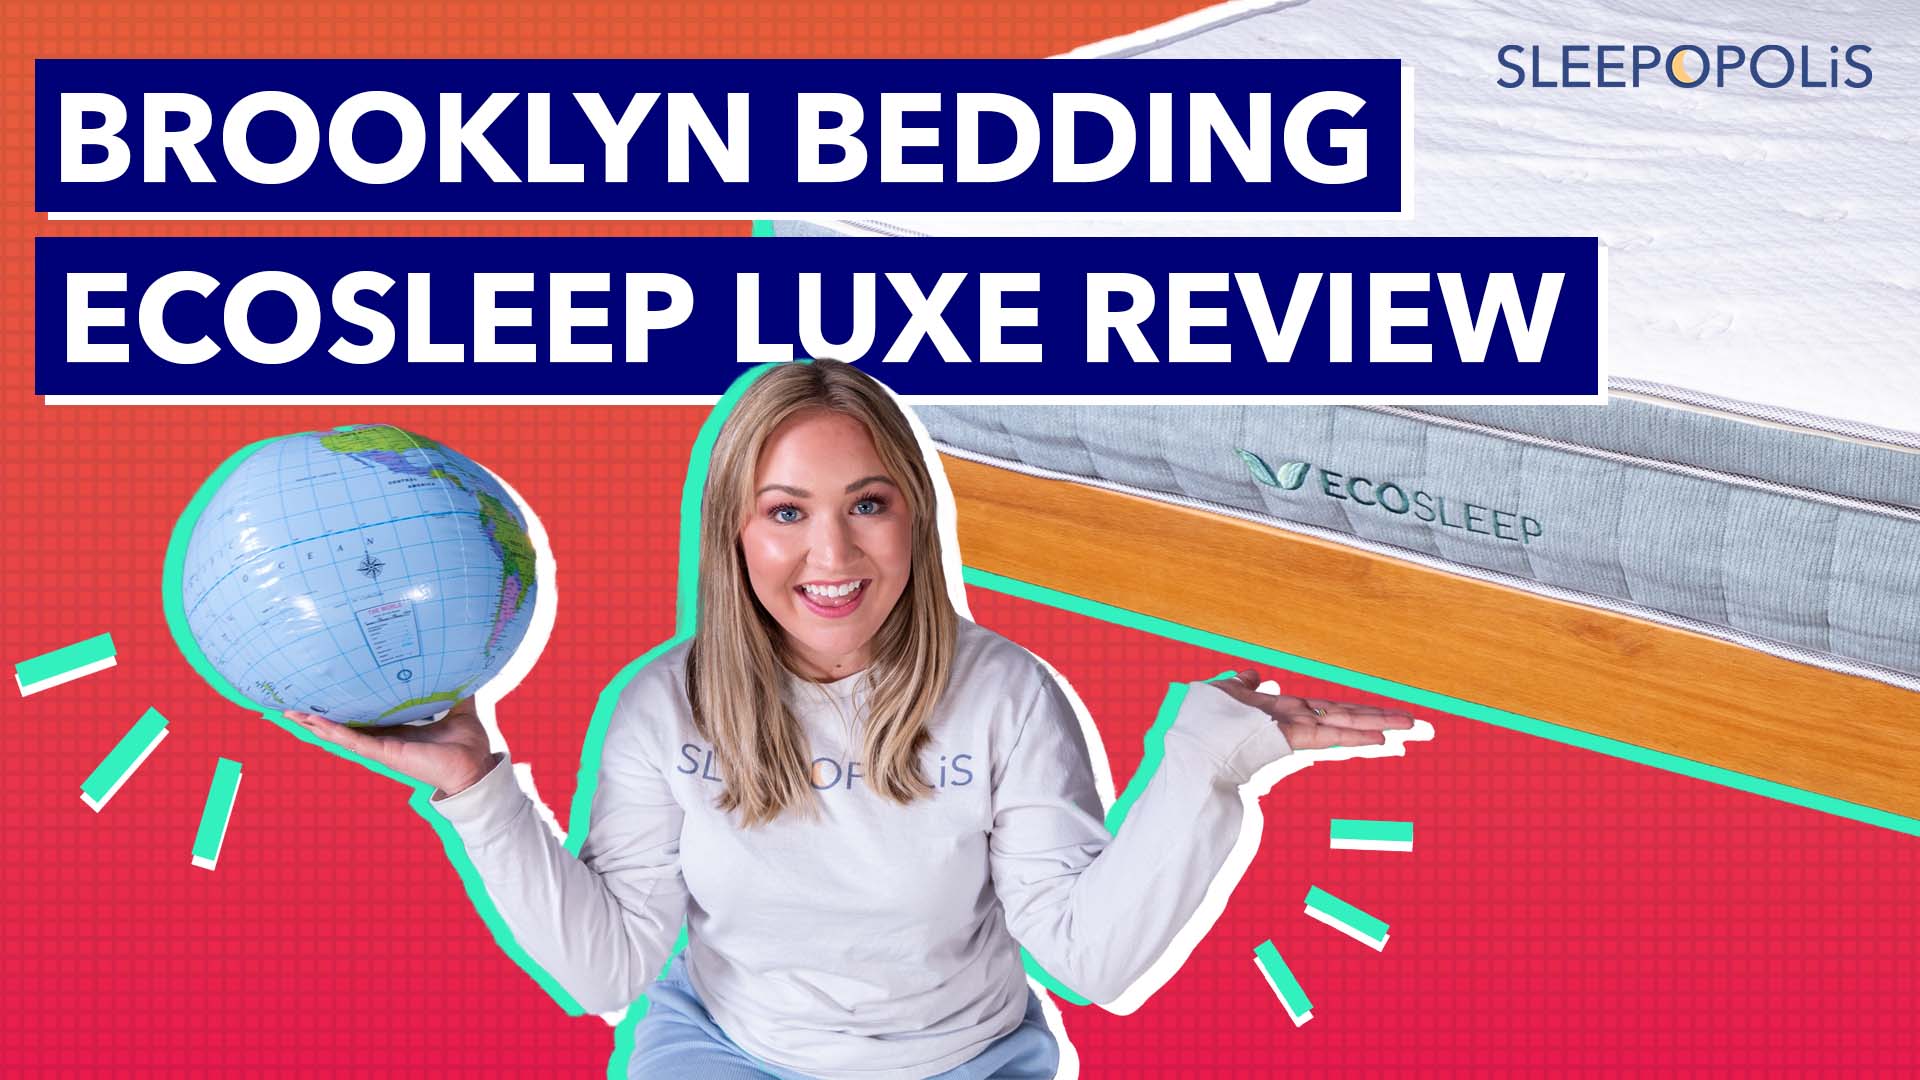 https://sleepopolis.com/wp-content/uploads/2022/02/brooklyn-bedding-ecosleep-luxe.jpg